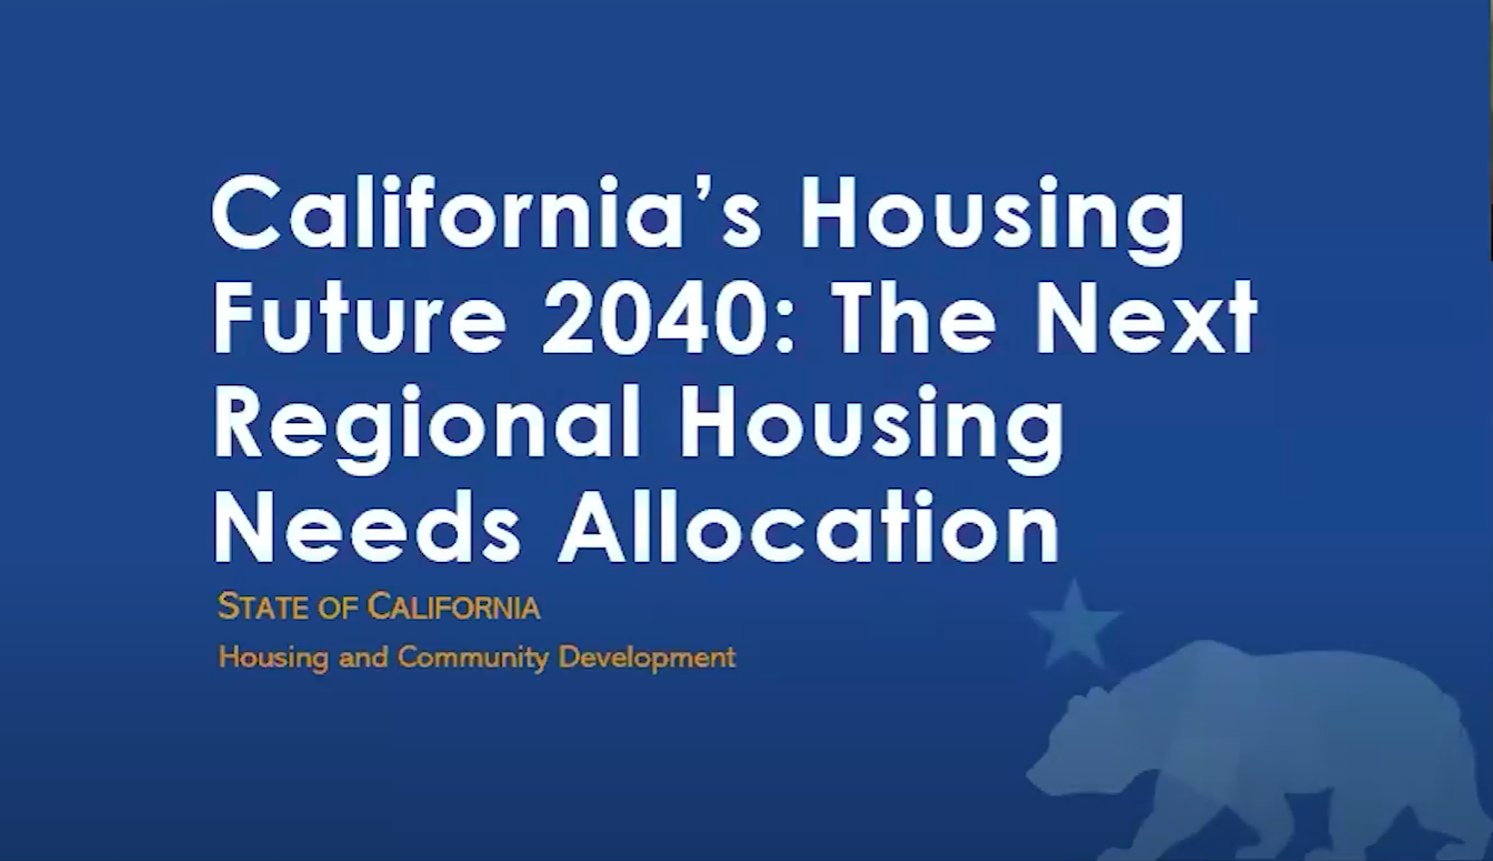 California housing and community development regional housing needs assessment 2040 future housing survey